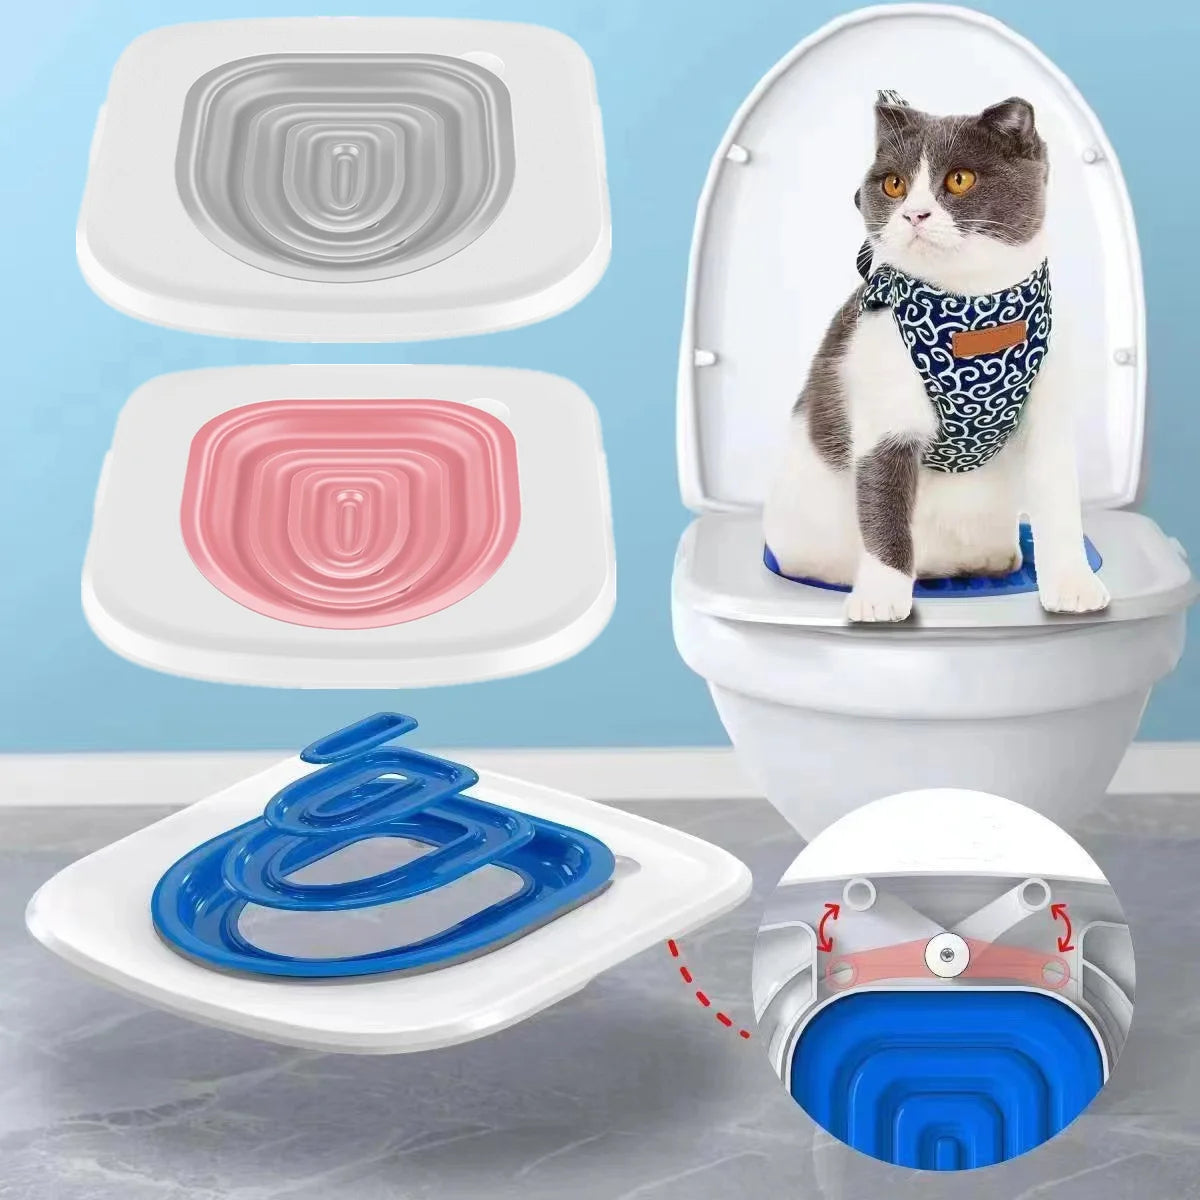 ZK30 Cat Toilet Trainer: Self-Service Training Set for Cats  petlums.com   